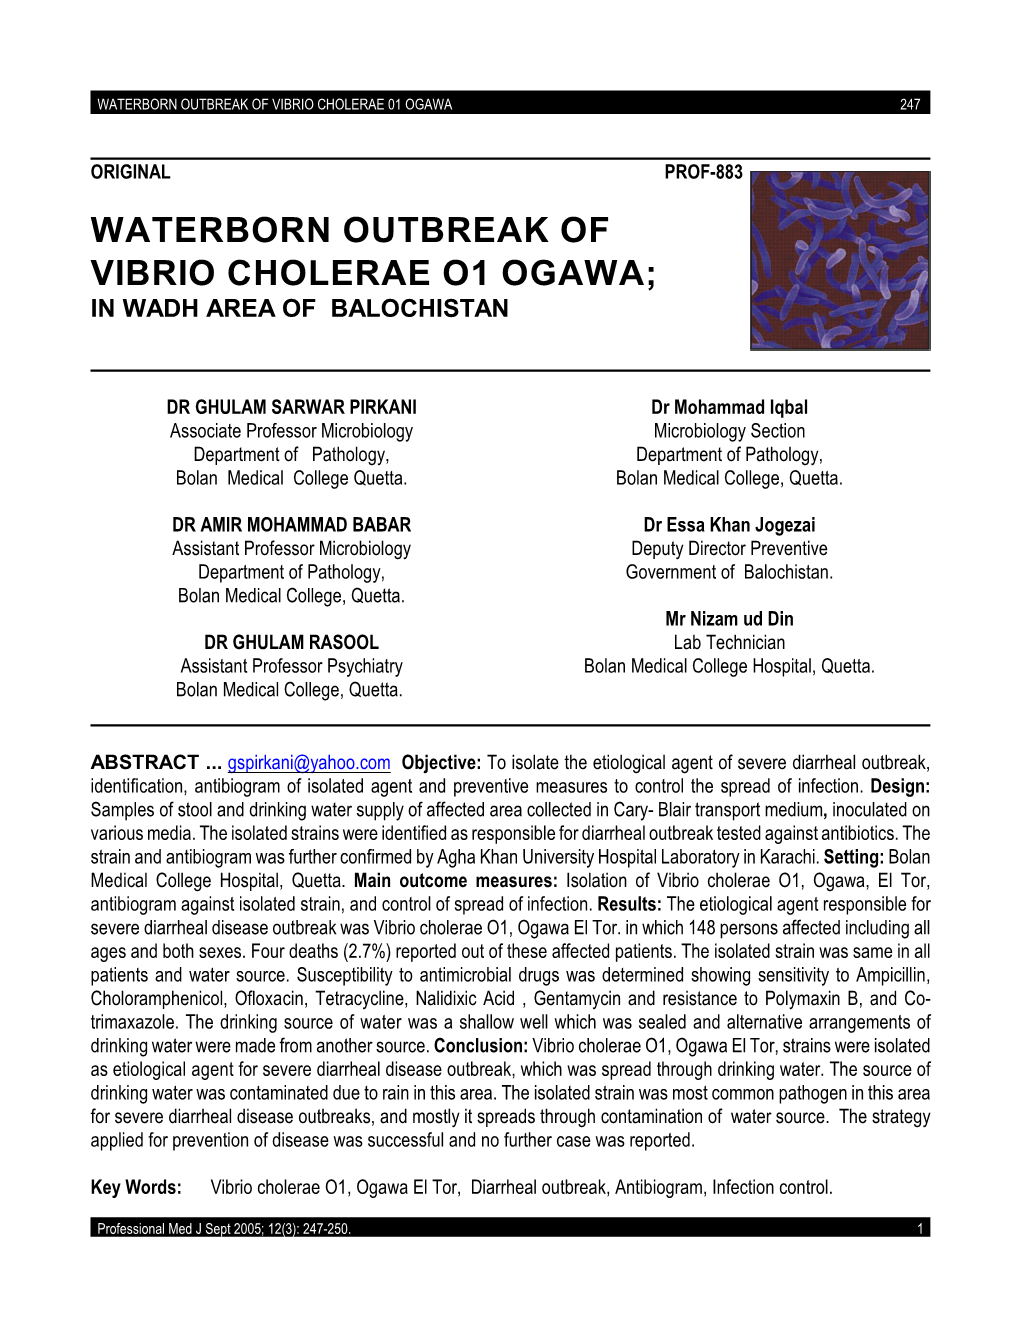 Waterborn Outbreak of Vibrio Cholerae O1 Ogawa; in Wadh Area of Balochistan